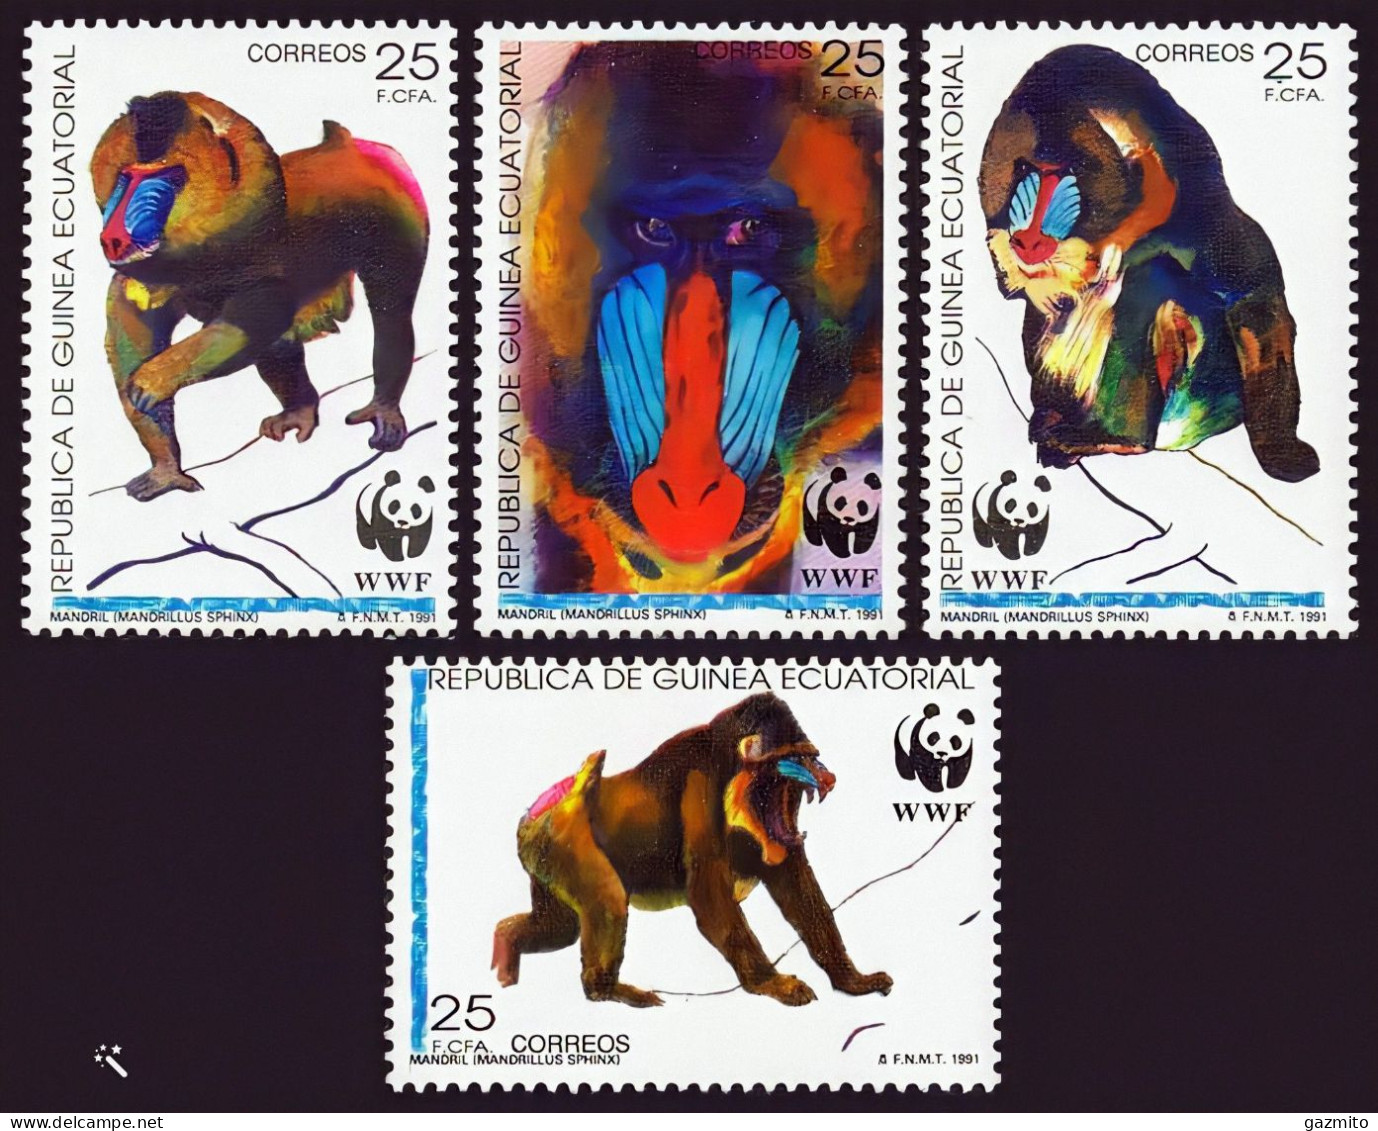 Guinea Equat. 1991, Wwf, Baboons, 4val - Monkeys